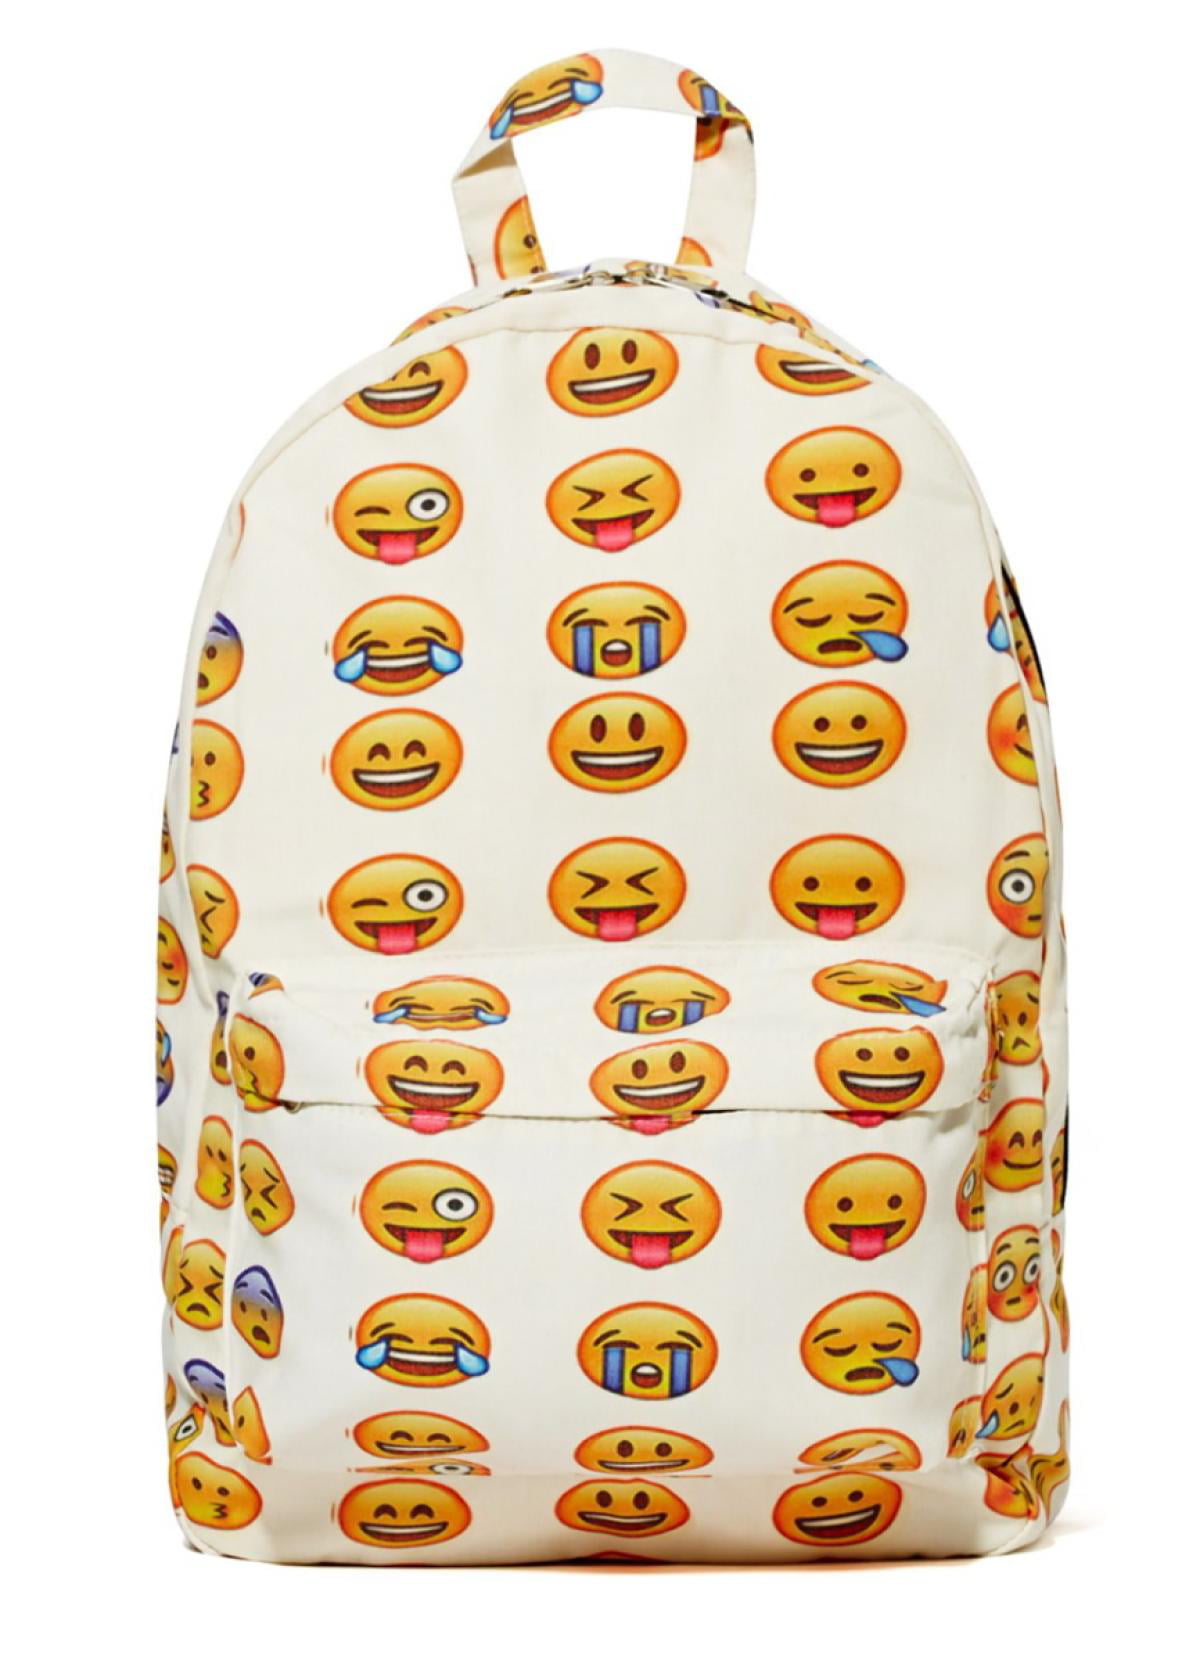 NEW Emojination Keyboard Backpack School Bag Emoji 